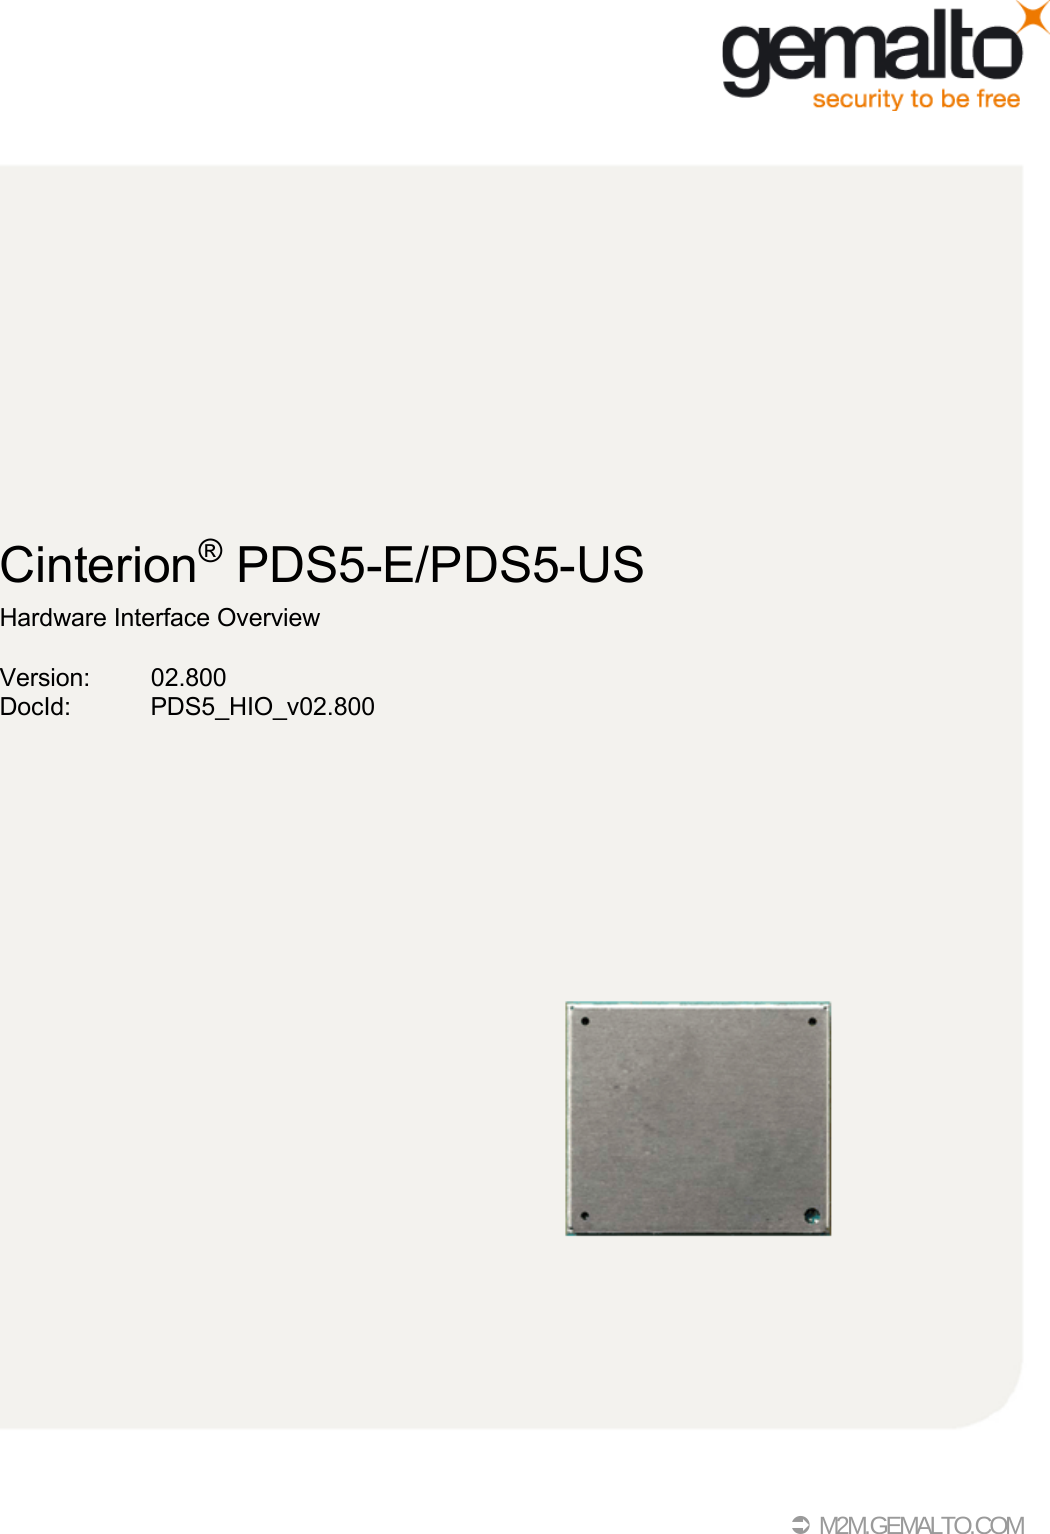                     Cinterion®  PDS5-E/PDS5-US Hardware Interface Overview Version:  02.800 DocId:  PDS5_HIO_v02.800                            M2M.GEMALTO.COM 